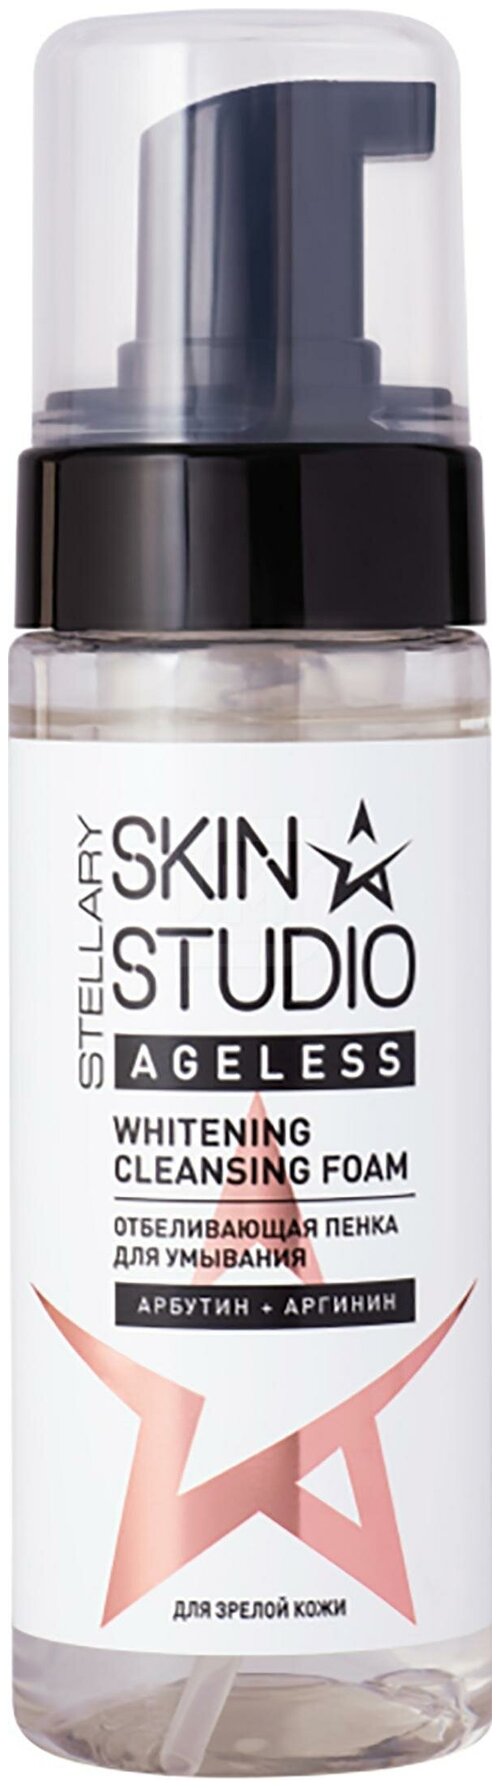 STELLARY Whitening cleansing foam Skin Studio Ageless Отбеливающая пенка для умывания, 150 мл